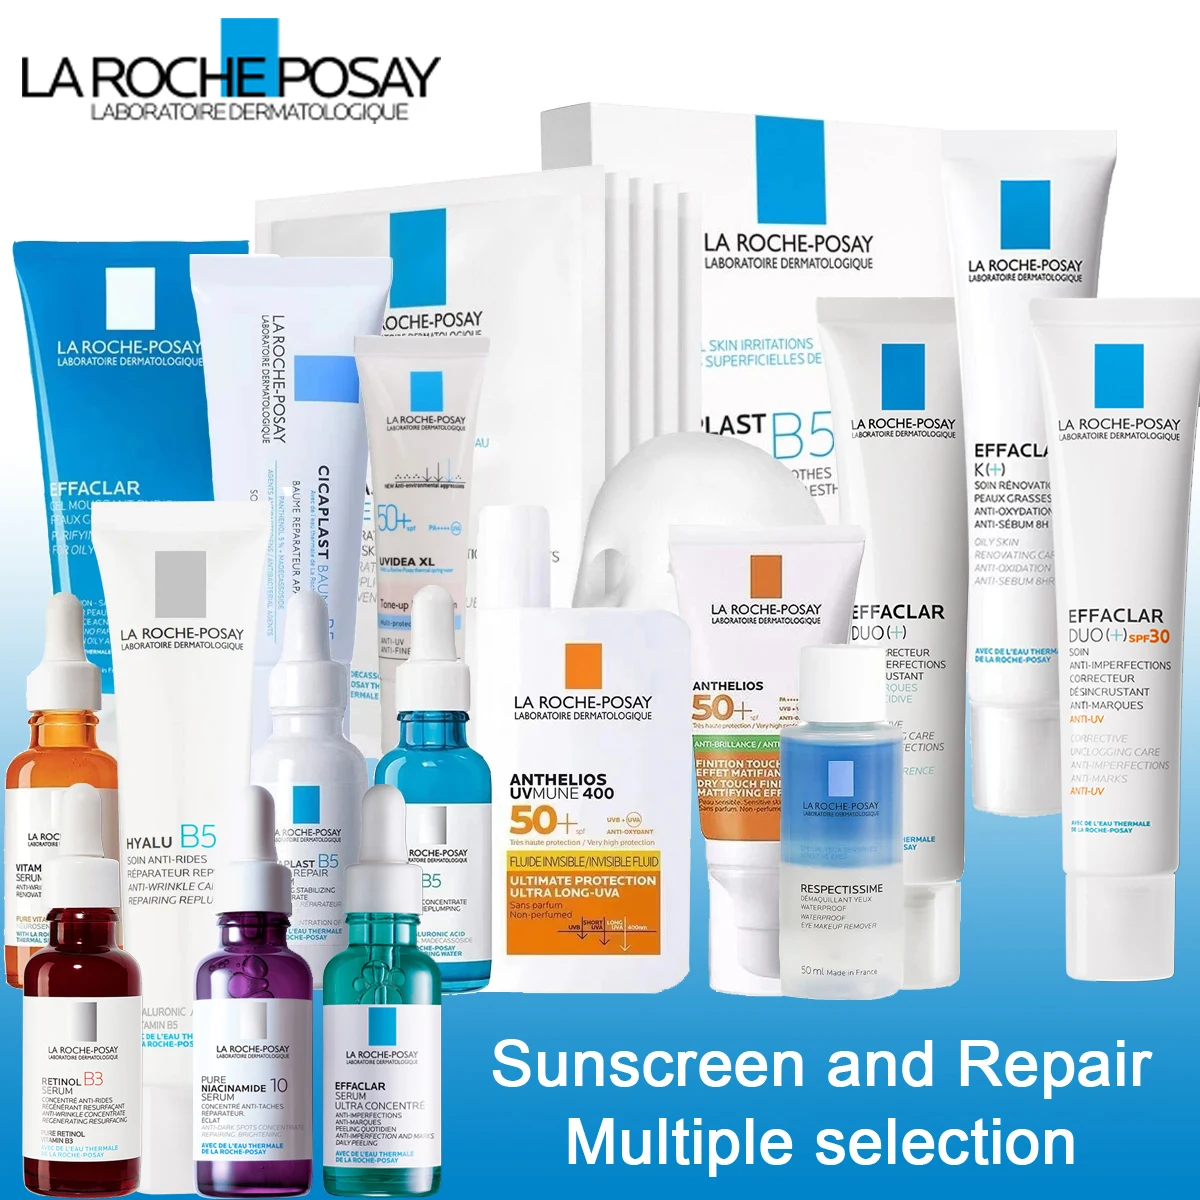 

La Roche Posay Effaclar Duo Spf/K+ Facial Acne Treatment Gel B5 Serum Sunscreen Cream For Acne Sensitive Skin Repair Cleanser